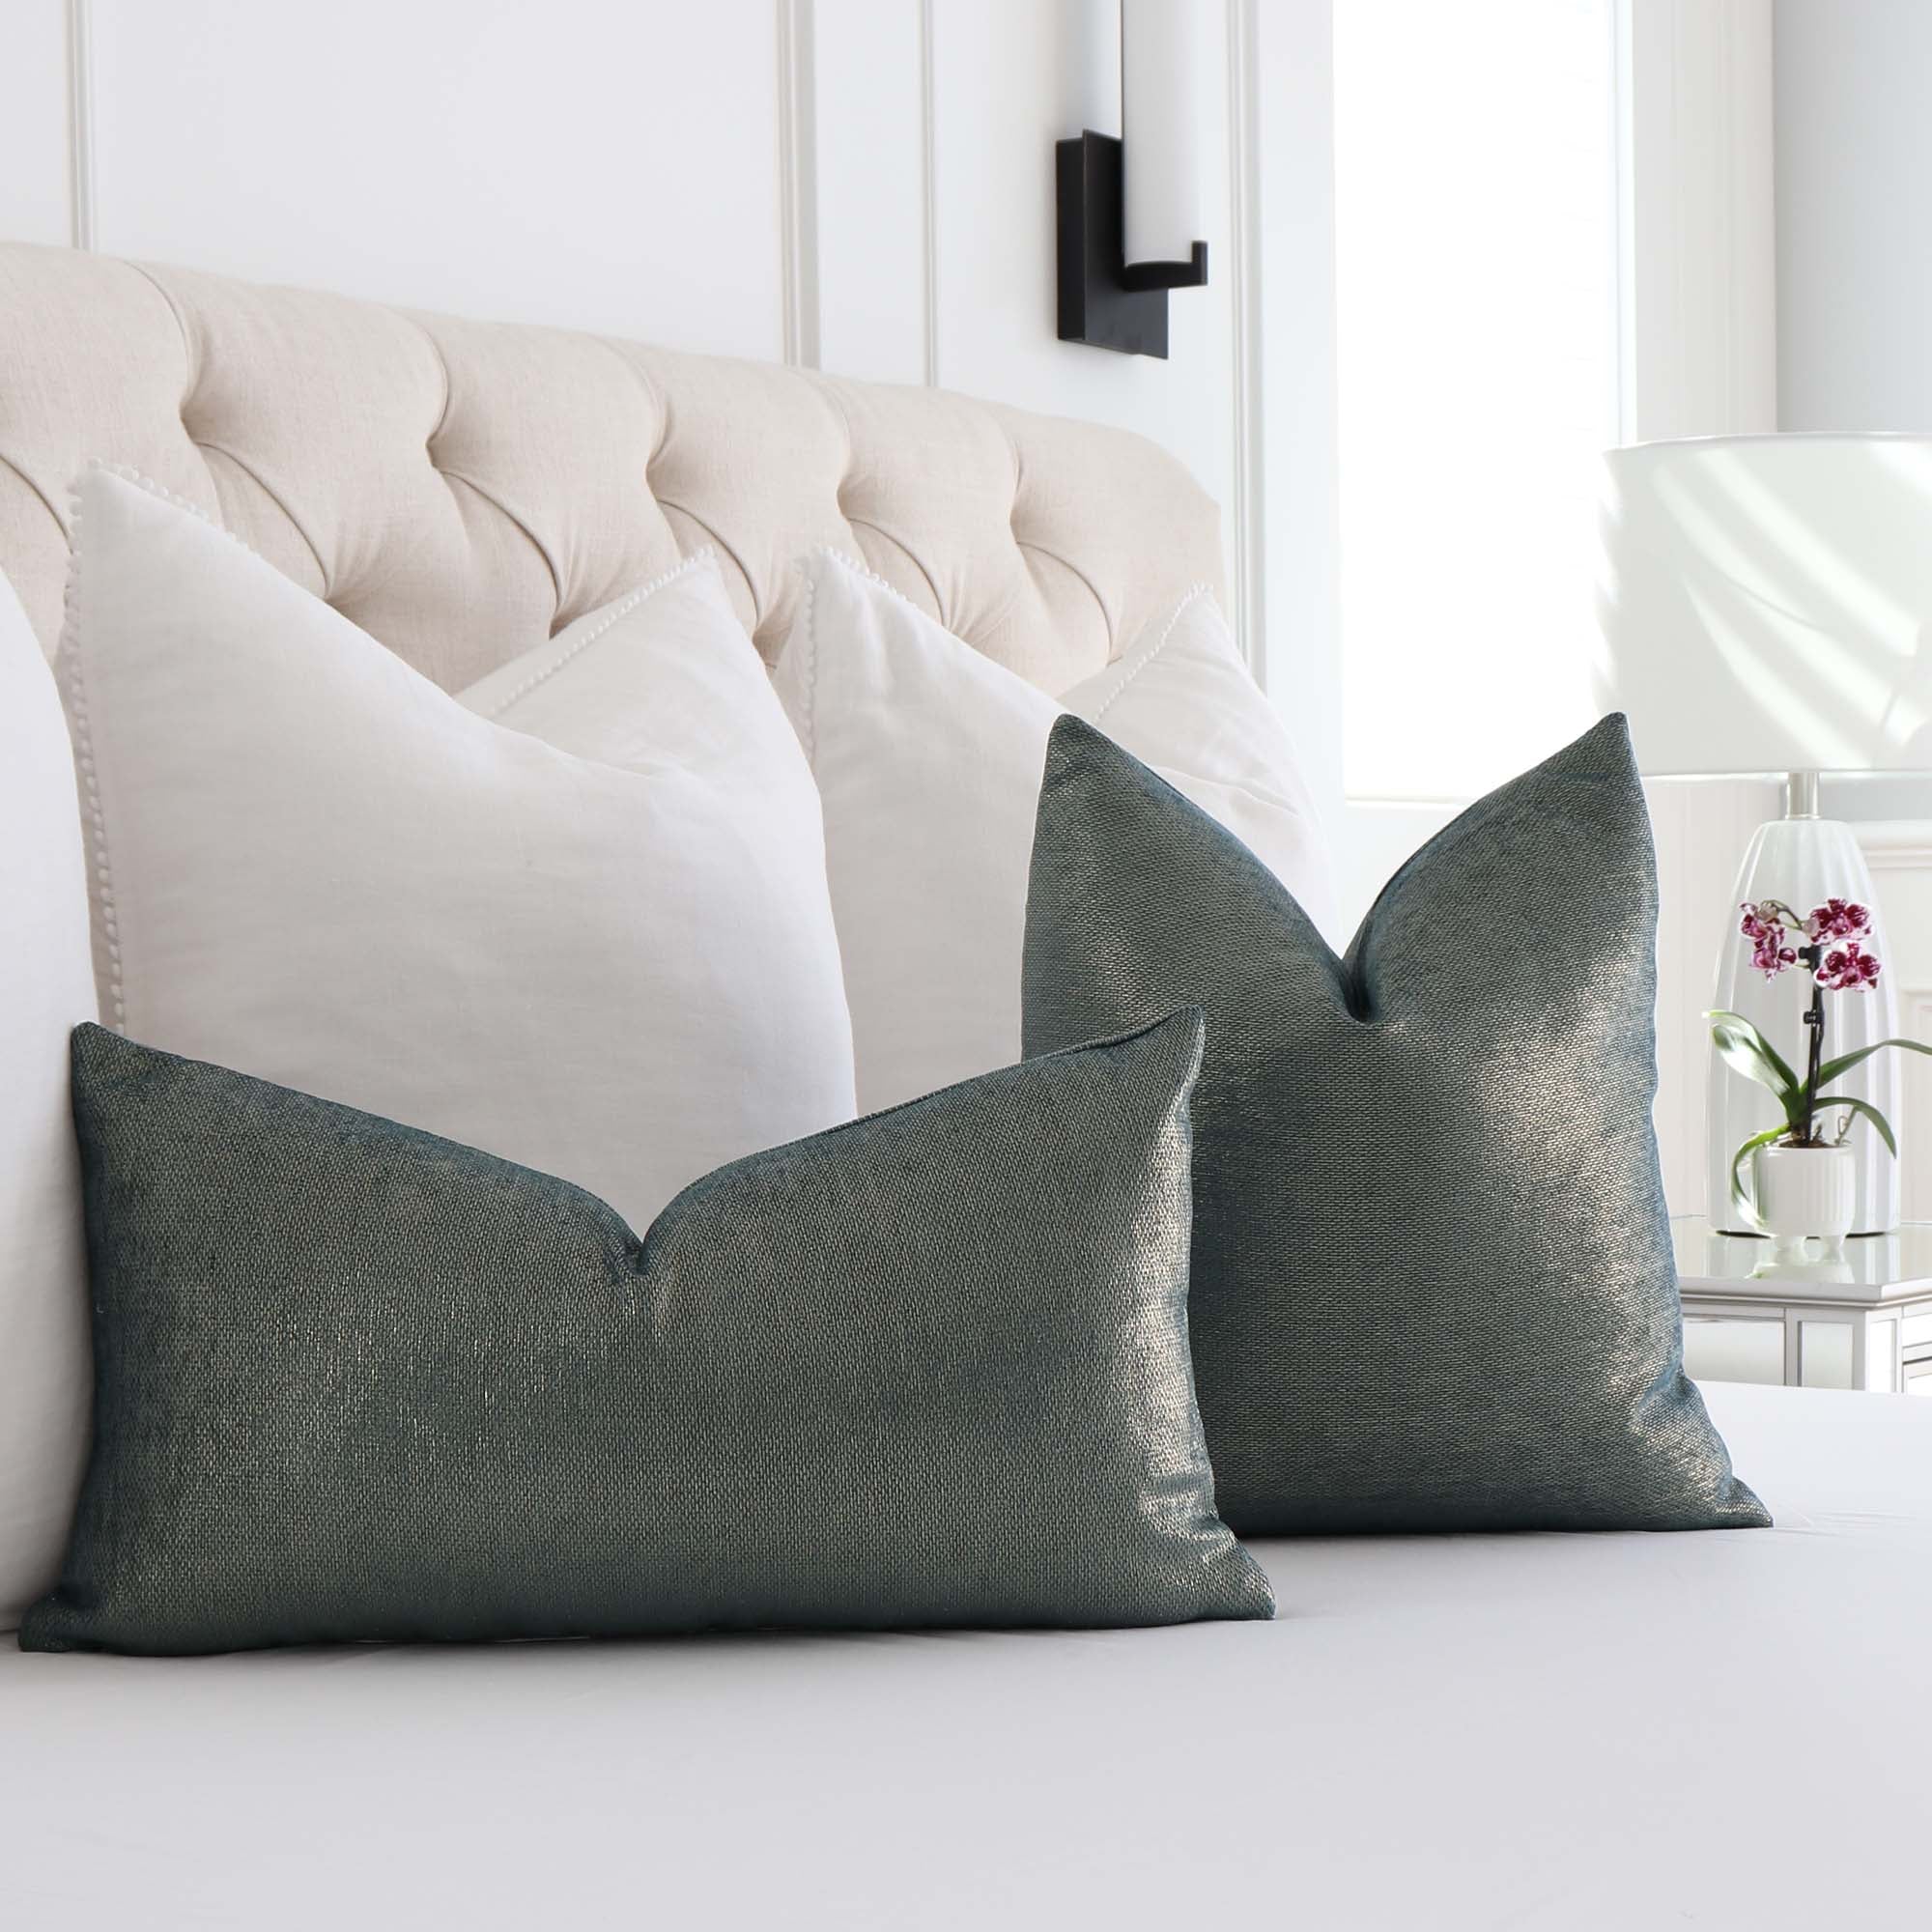 Schumacher Glimmer Peacock Blue Designer Luxury Throw Pillow Cover in Bedroom